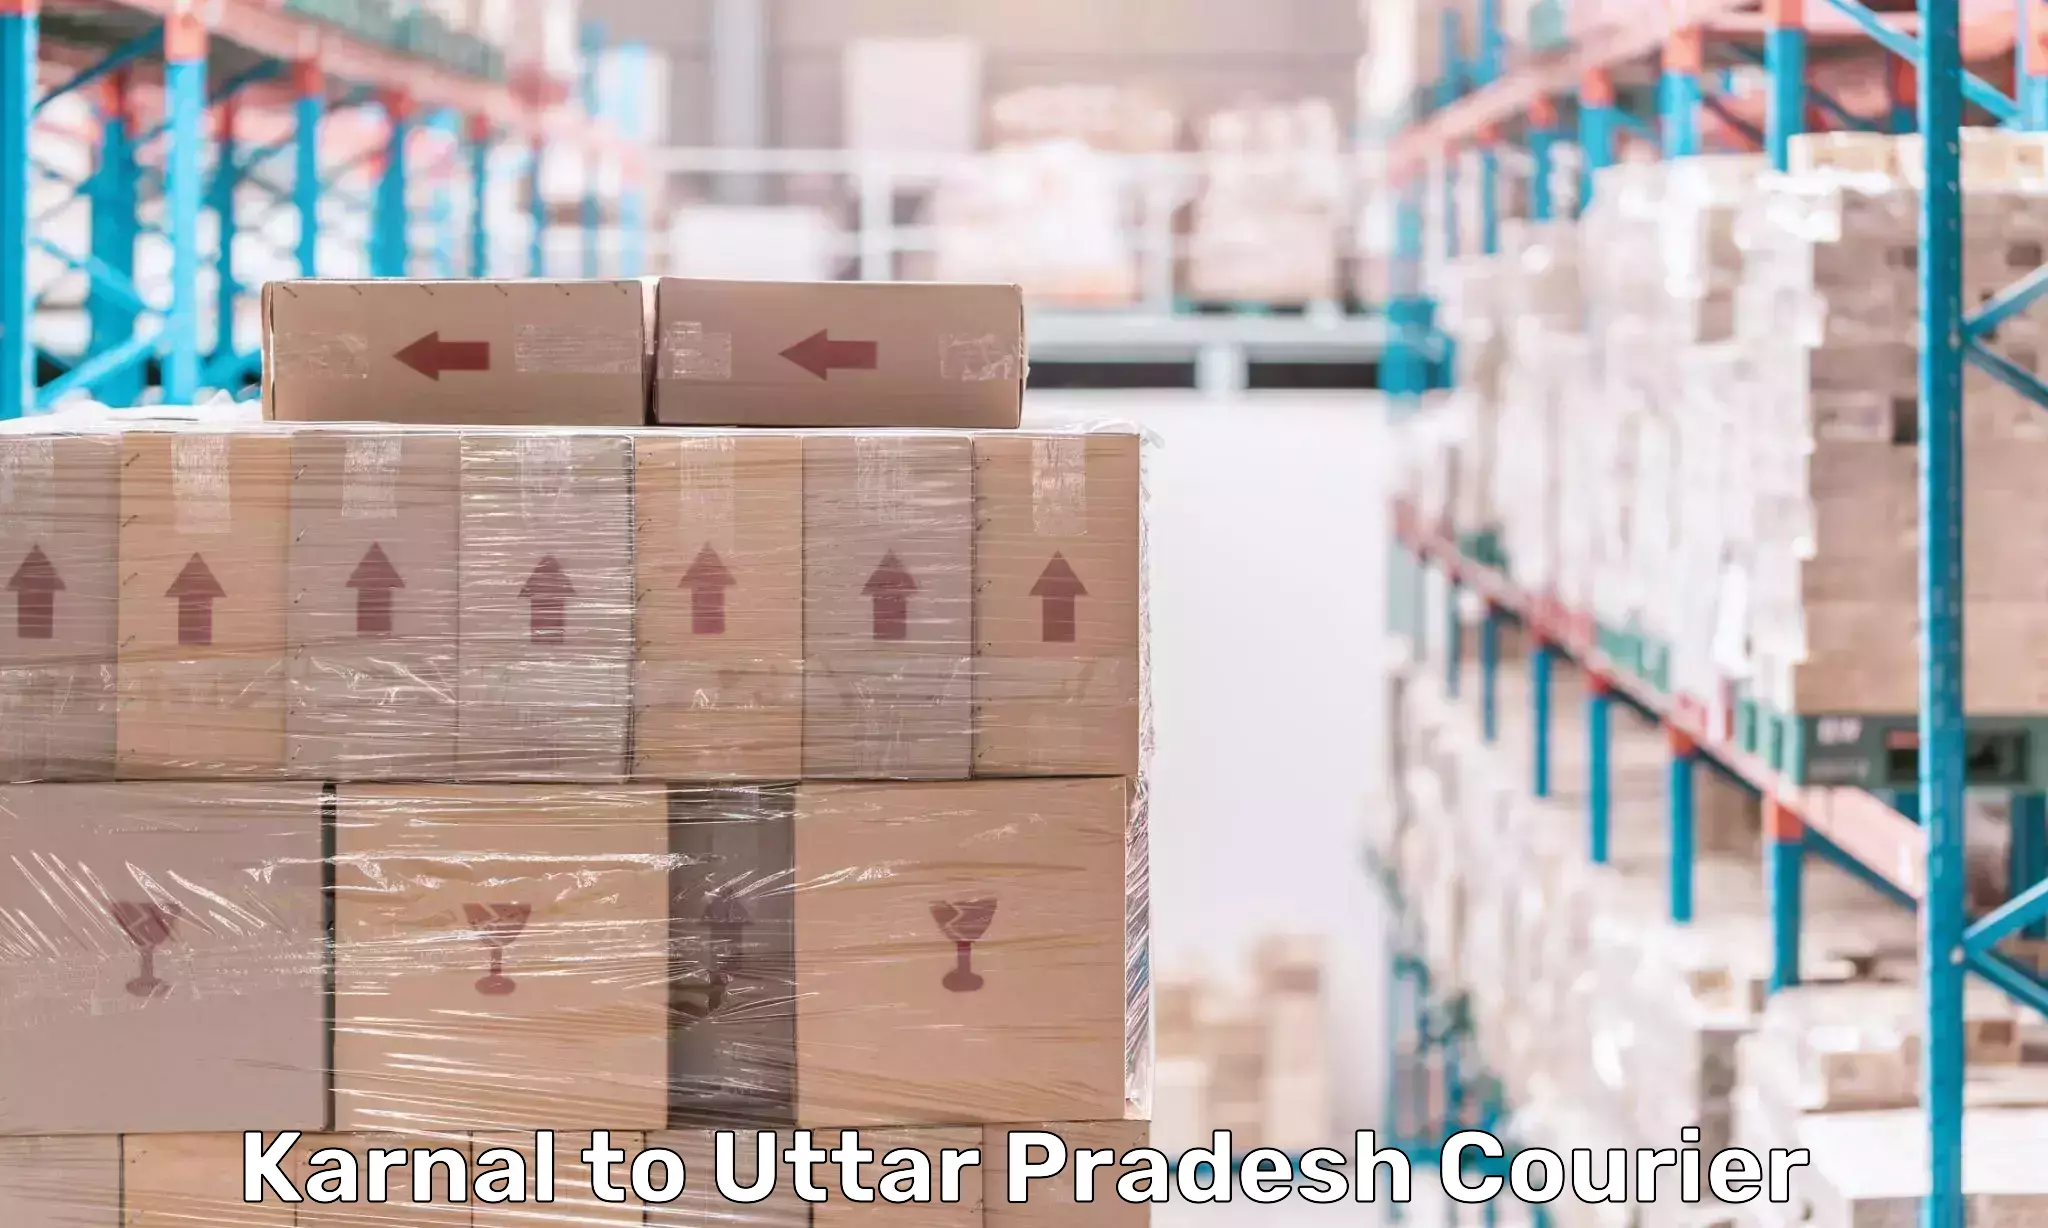 Express delivery capabilities in Karnal to Uttar Pradesh